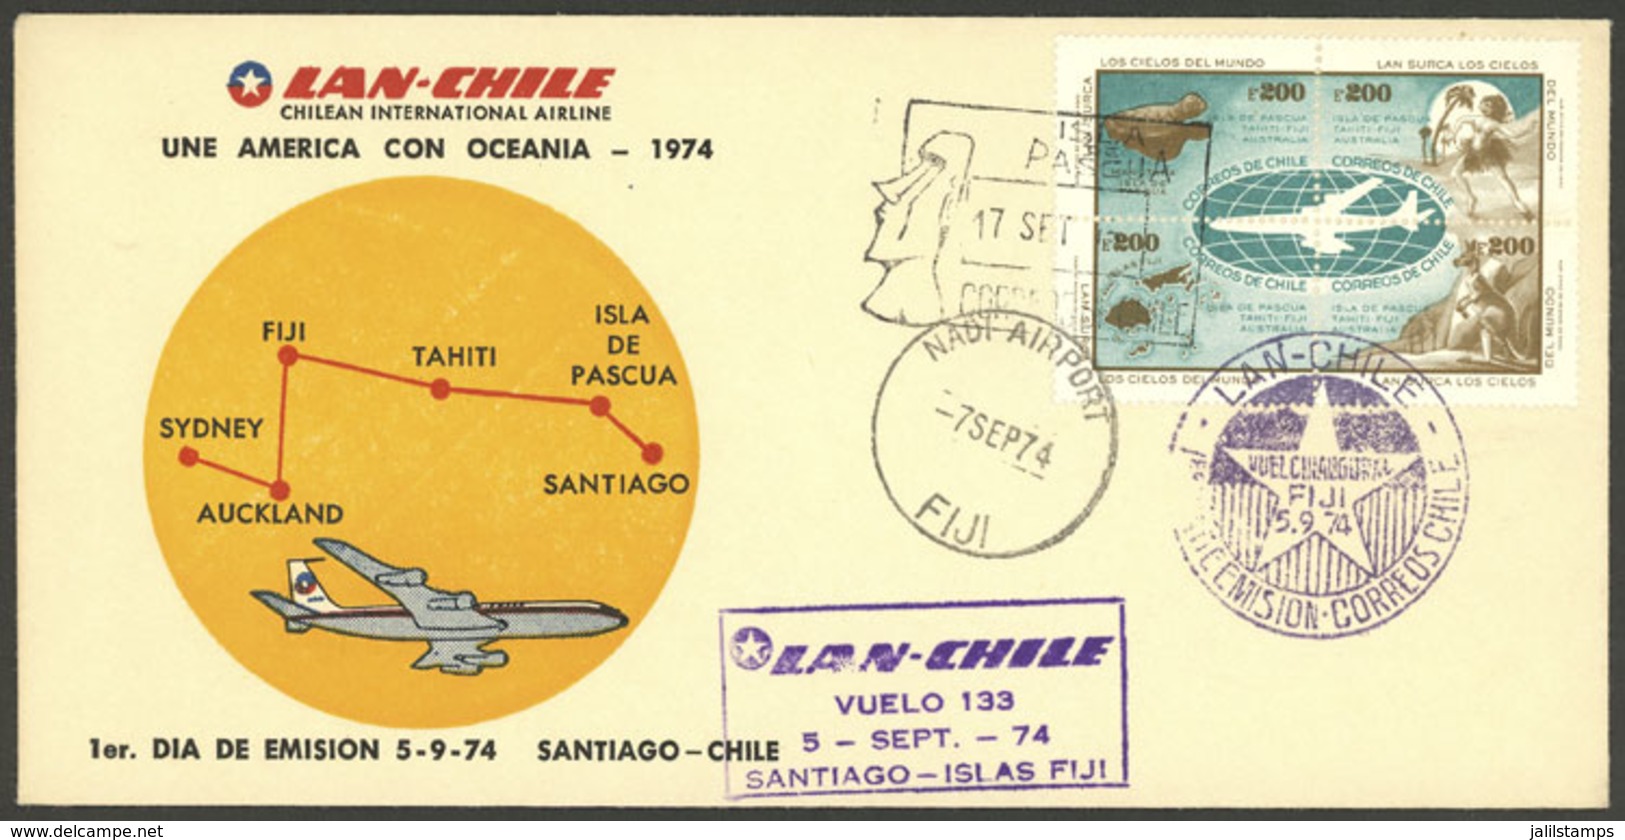 CHILE: 7/SE/1974 FIJI - PASCUA - SANTIAGO, First Flight (return) Of Lan-Chile, VF Quality! - Cile